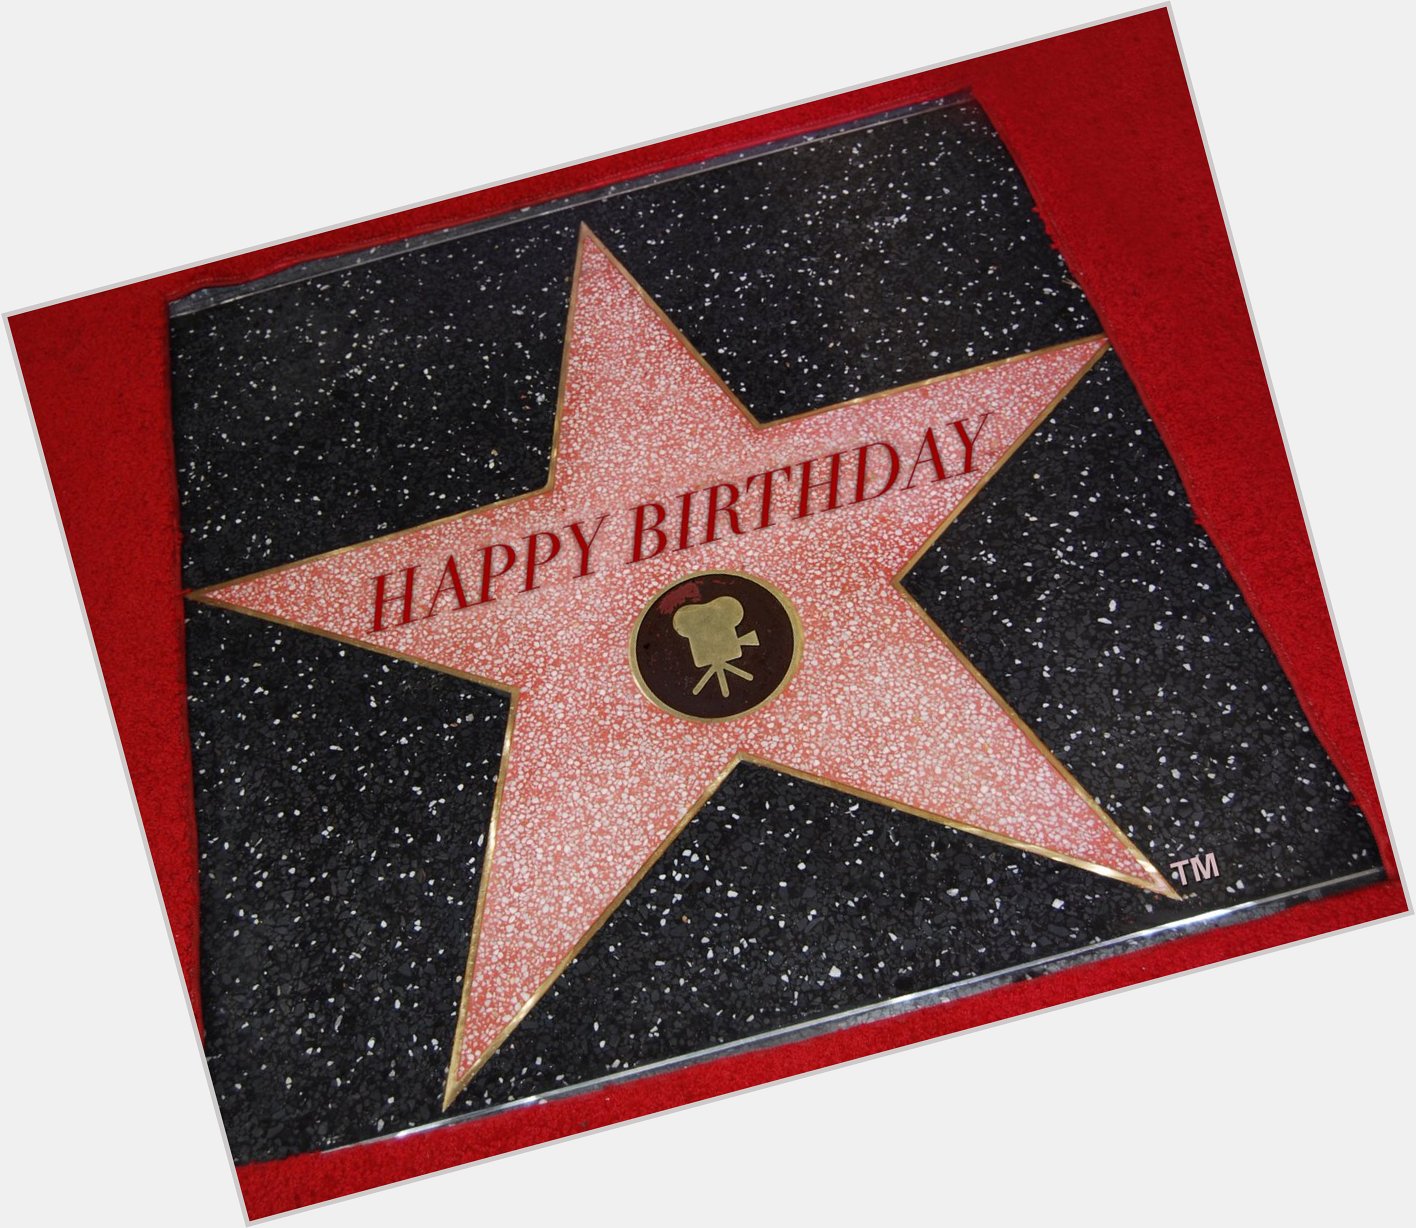 Happy birthday to Walk of Famer Bruce Willis! 